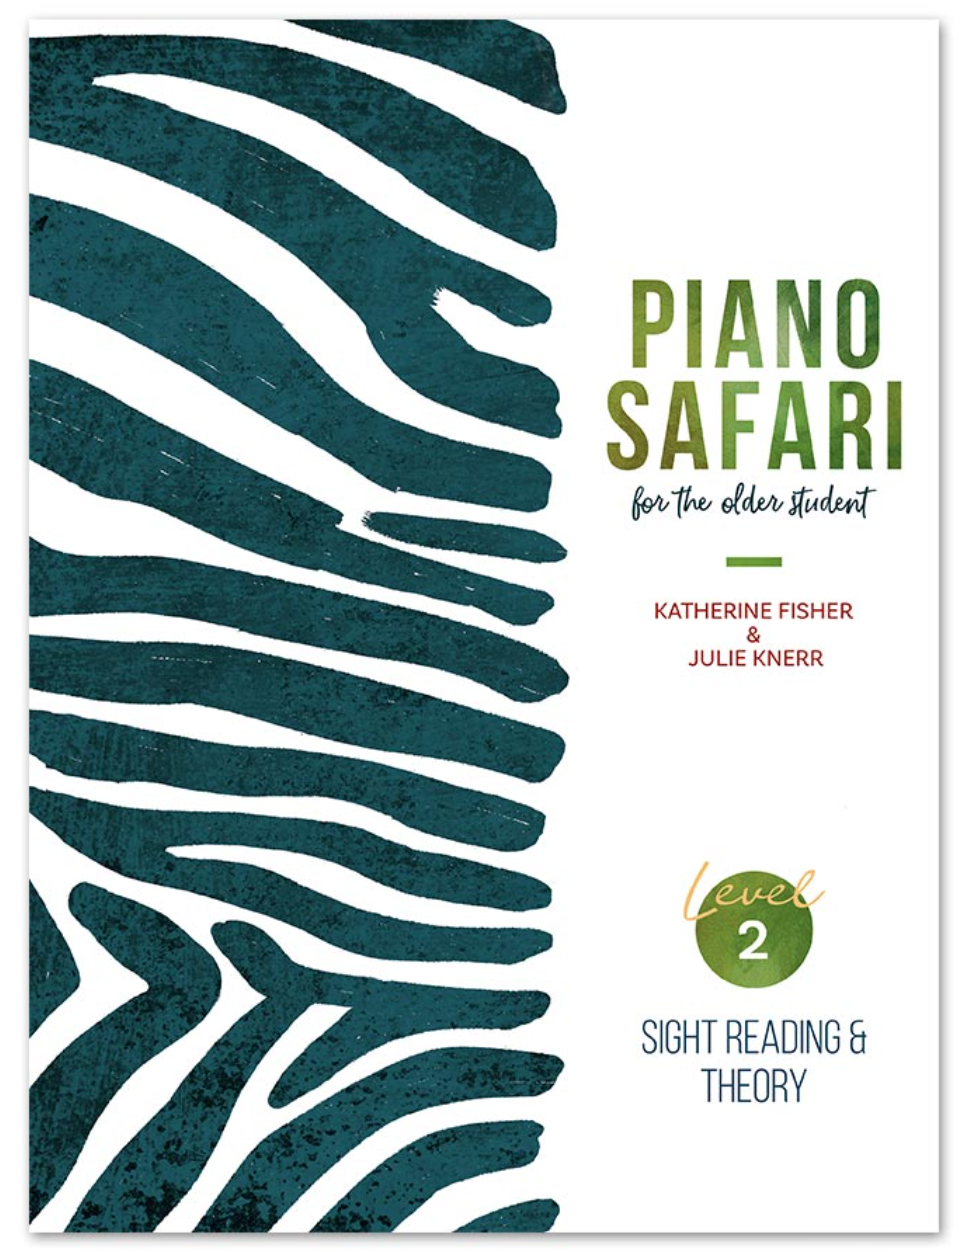 Piano Safari Older Student Sight Reading & Theory 2 - Fisher Katherine; Hague Julie Knerr Piano Safari PNSF1059